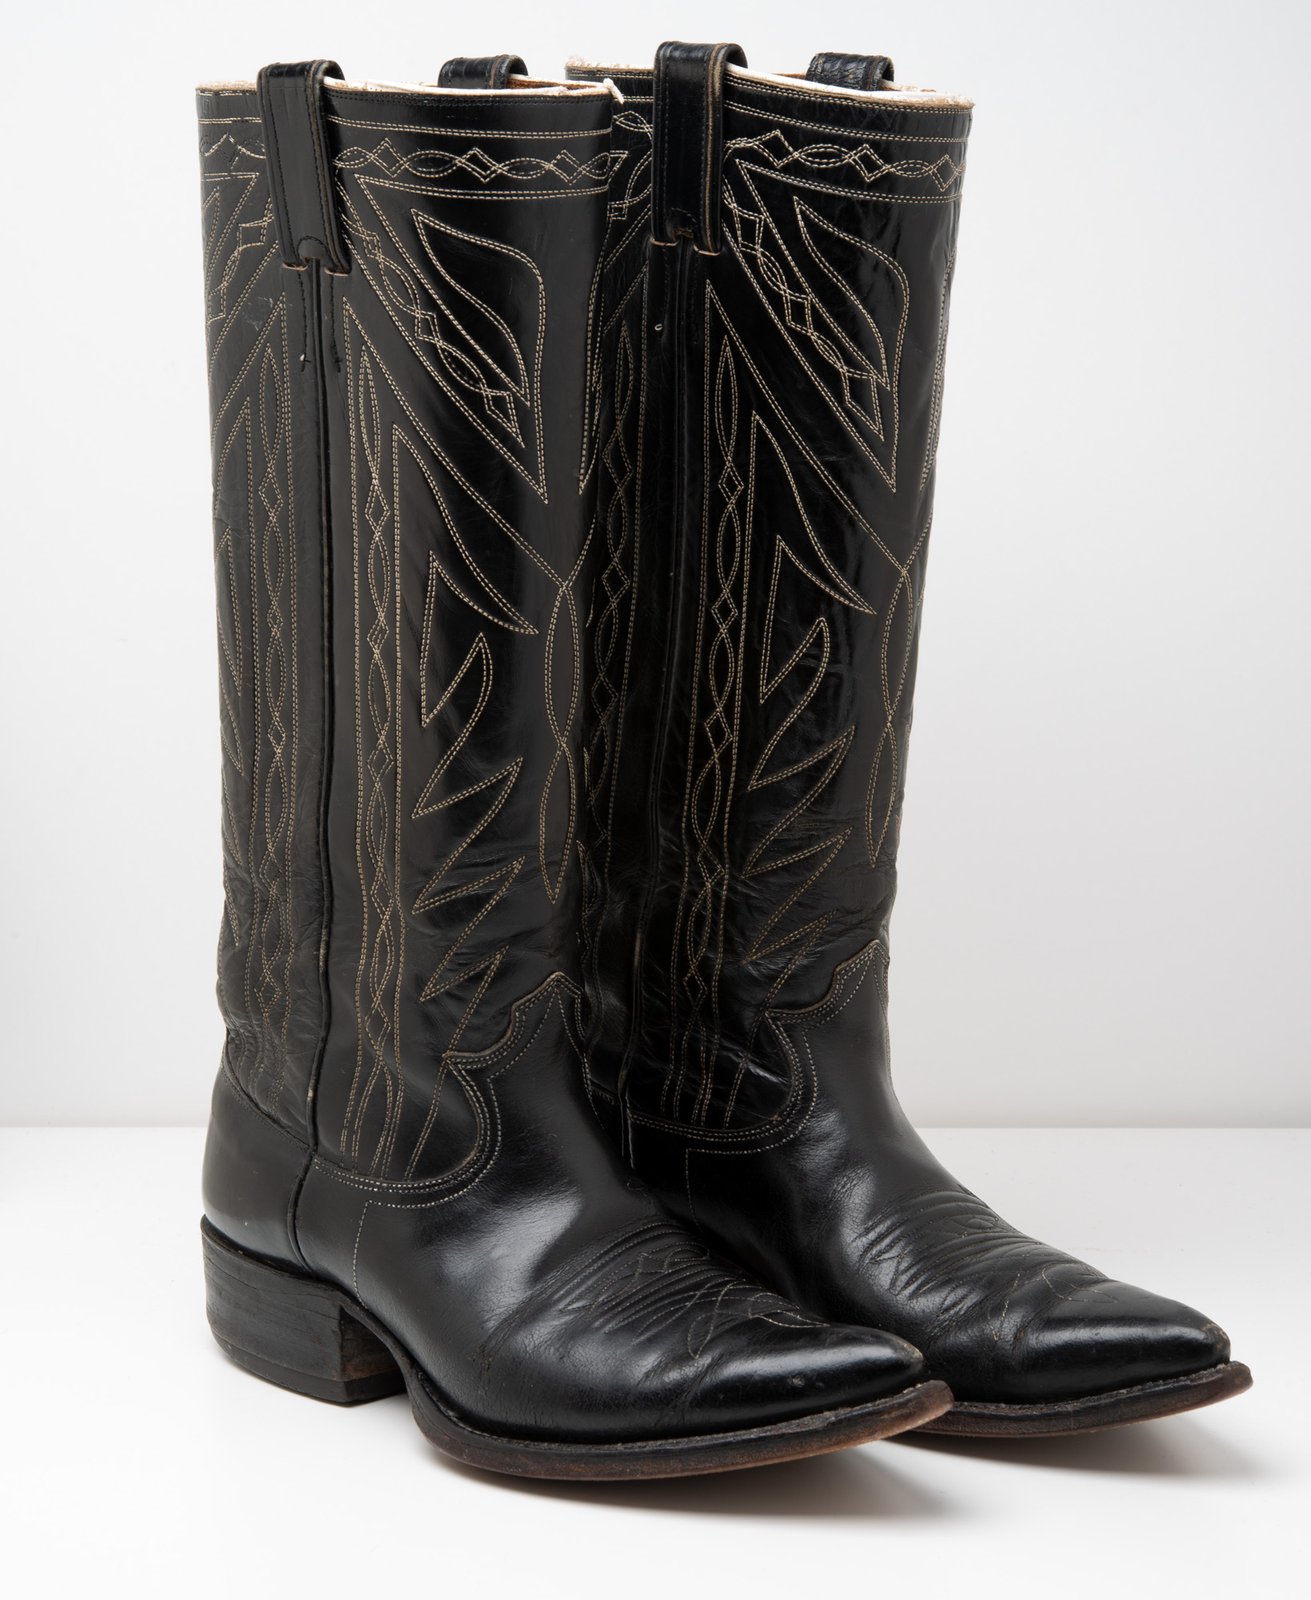 mens cowboy boots size 7.5